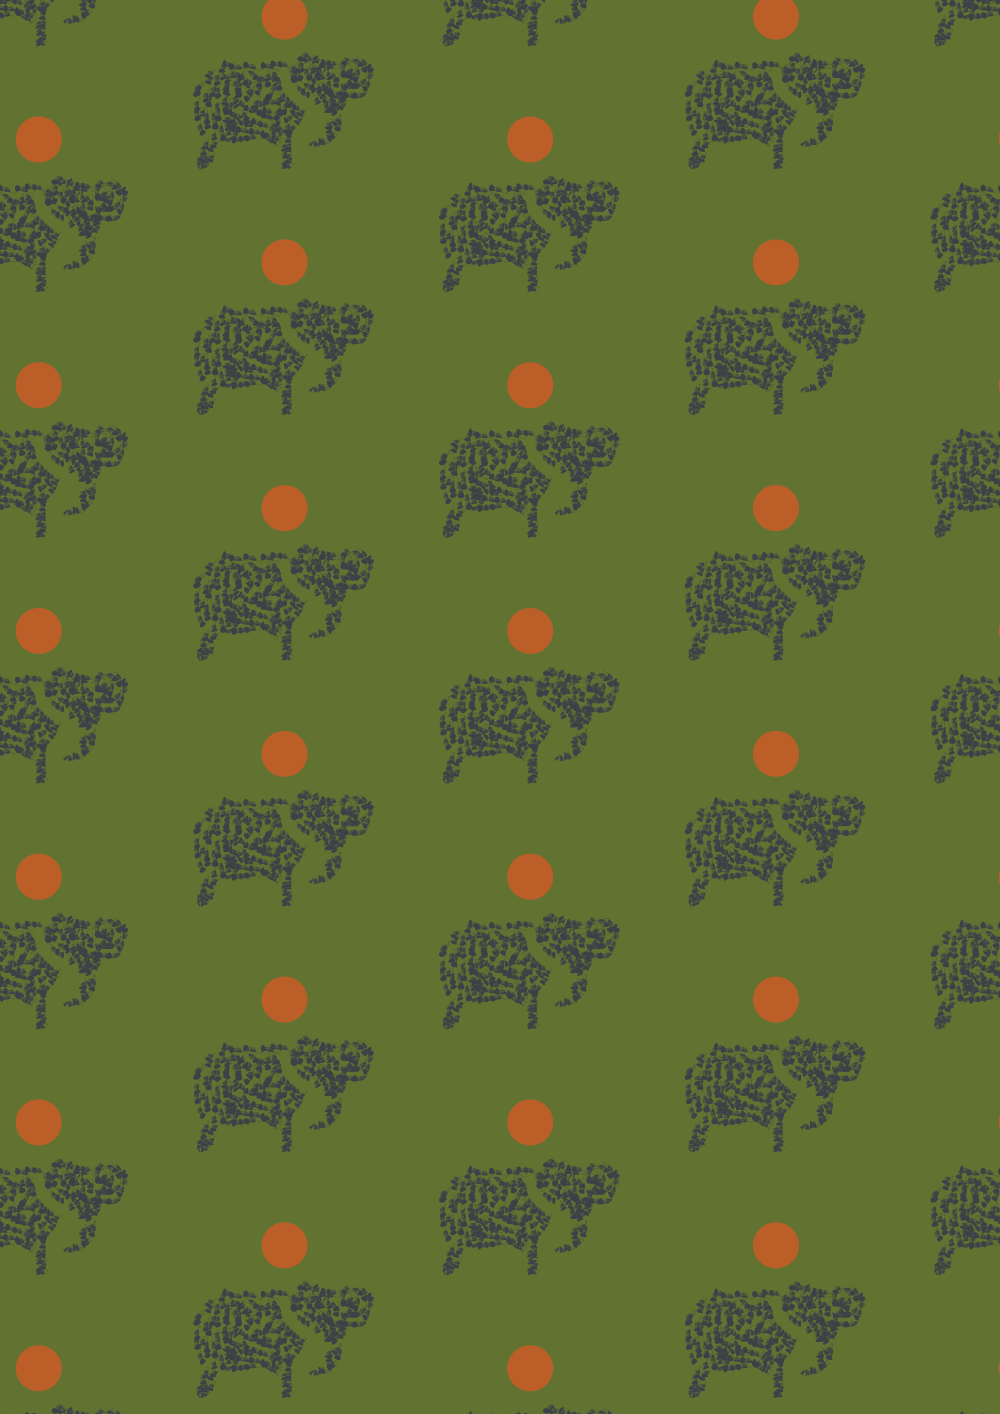 Elephant pattern